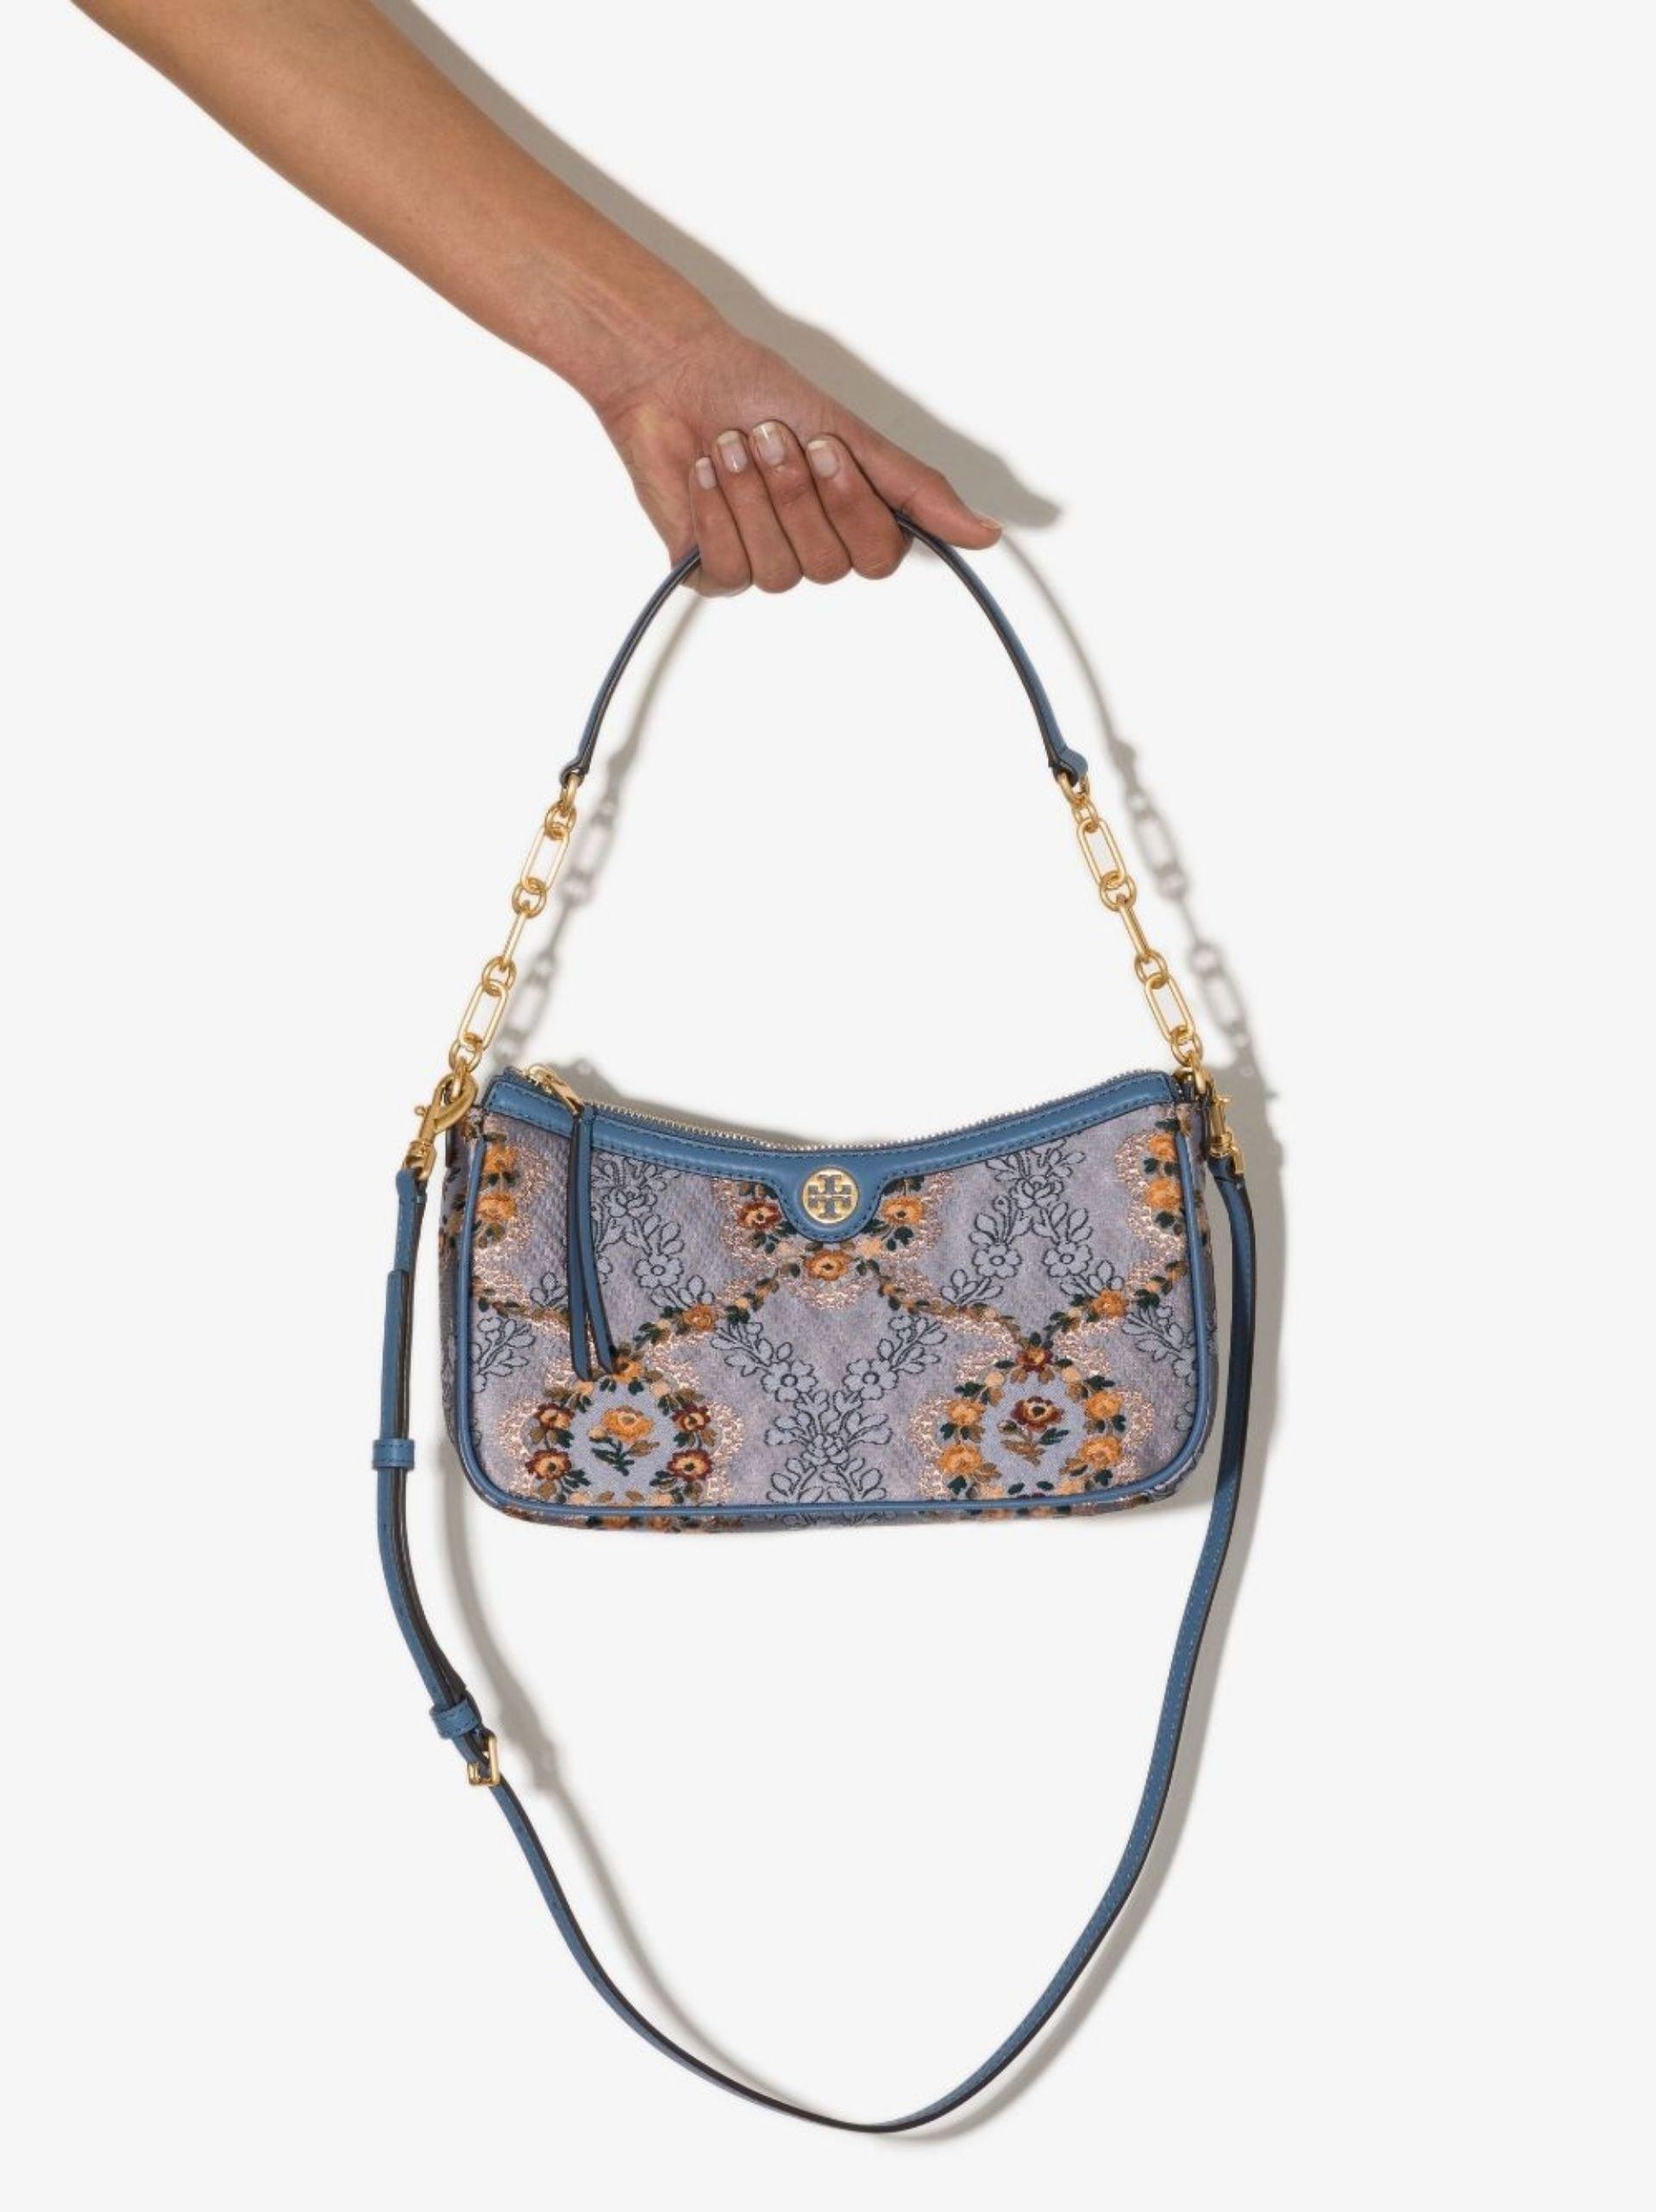 Tory Burch Women's T Monogram Chenille Shoulder Handbag 